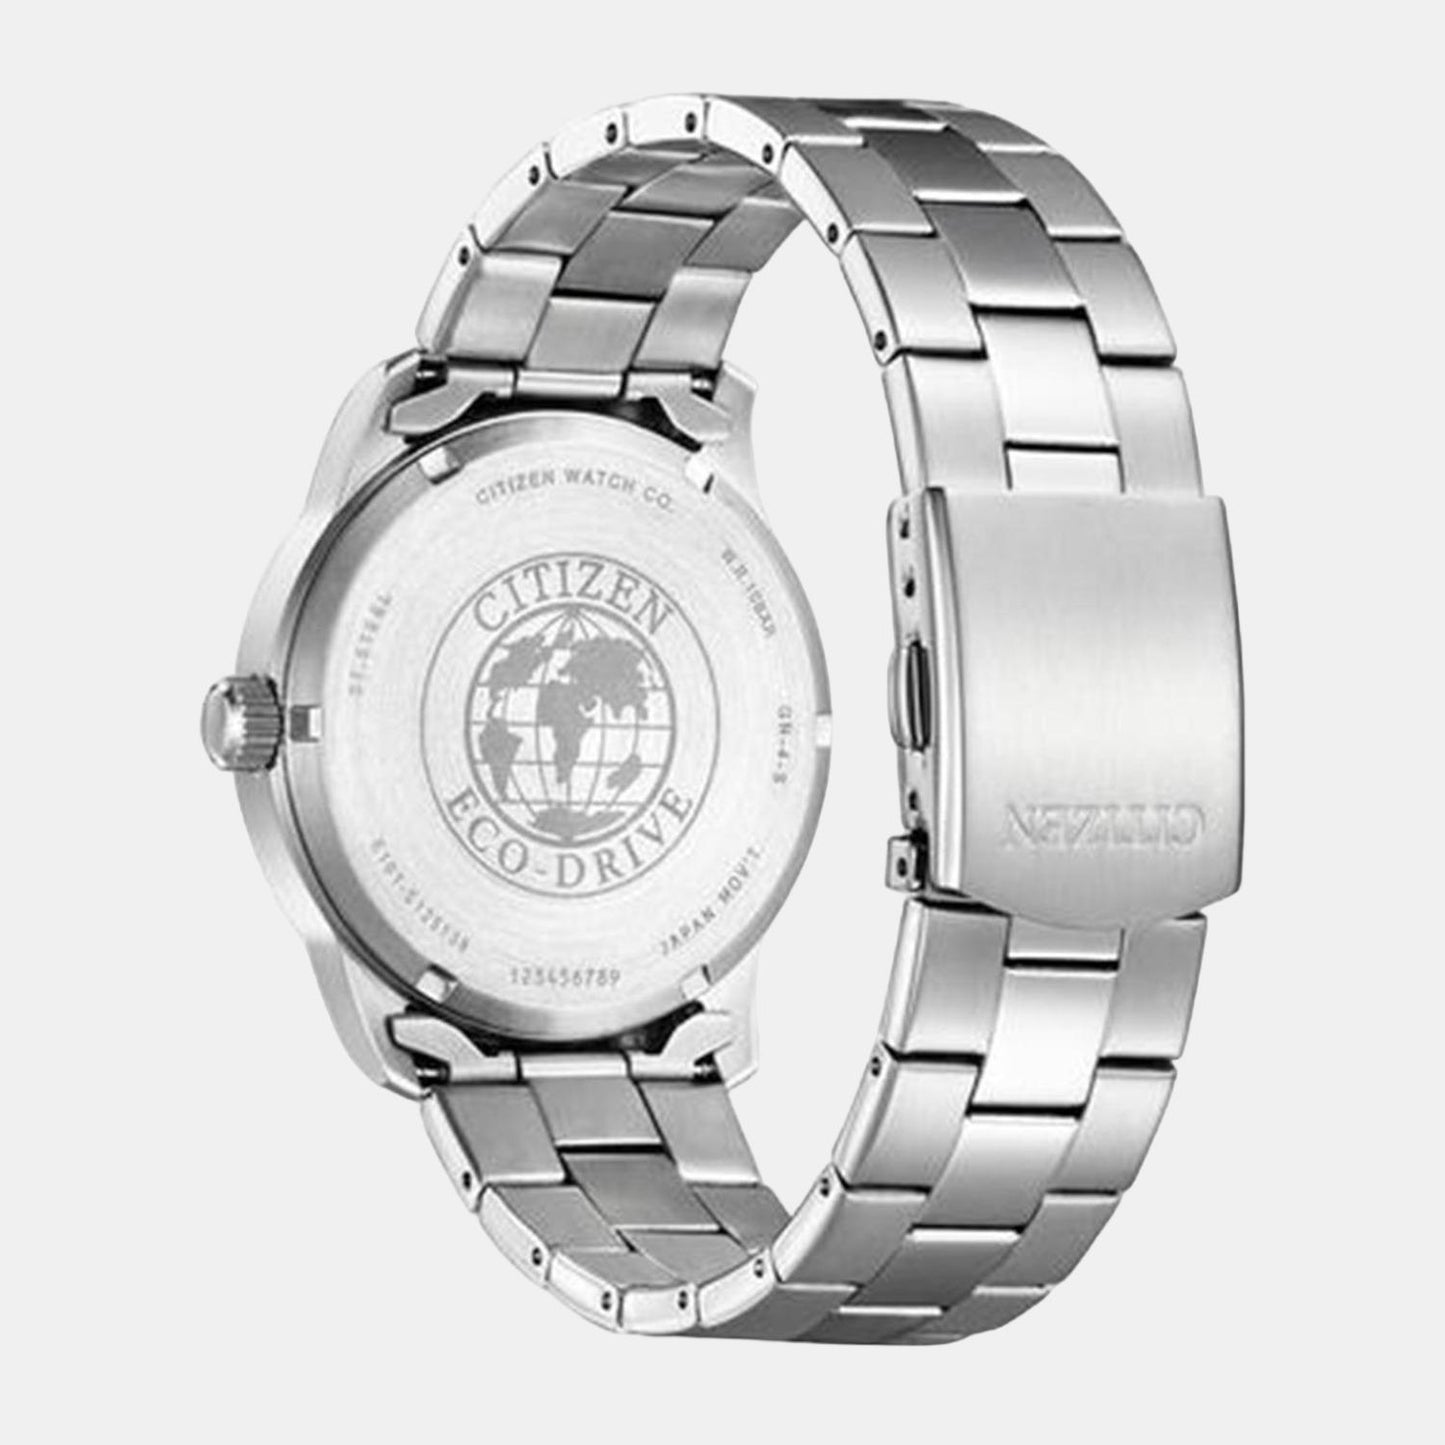 citizen-stainless-steel-white-analog-men-watch-bm8550-81a